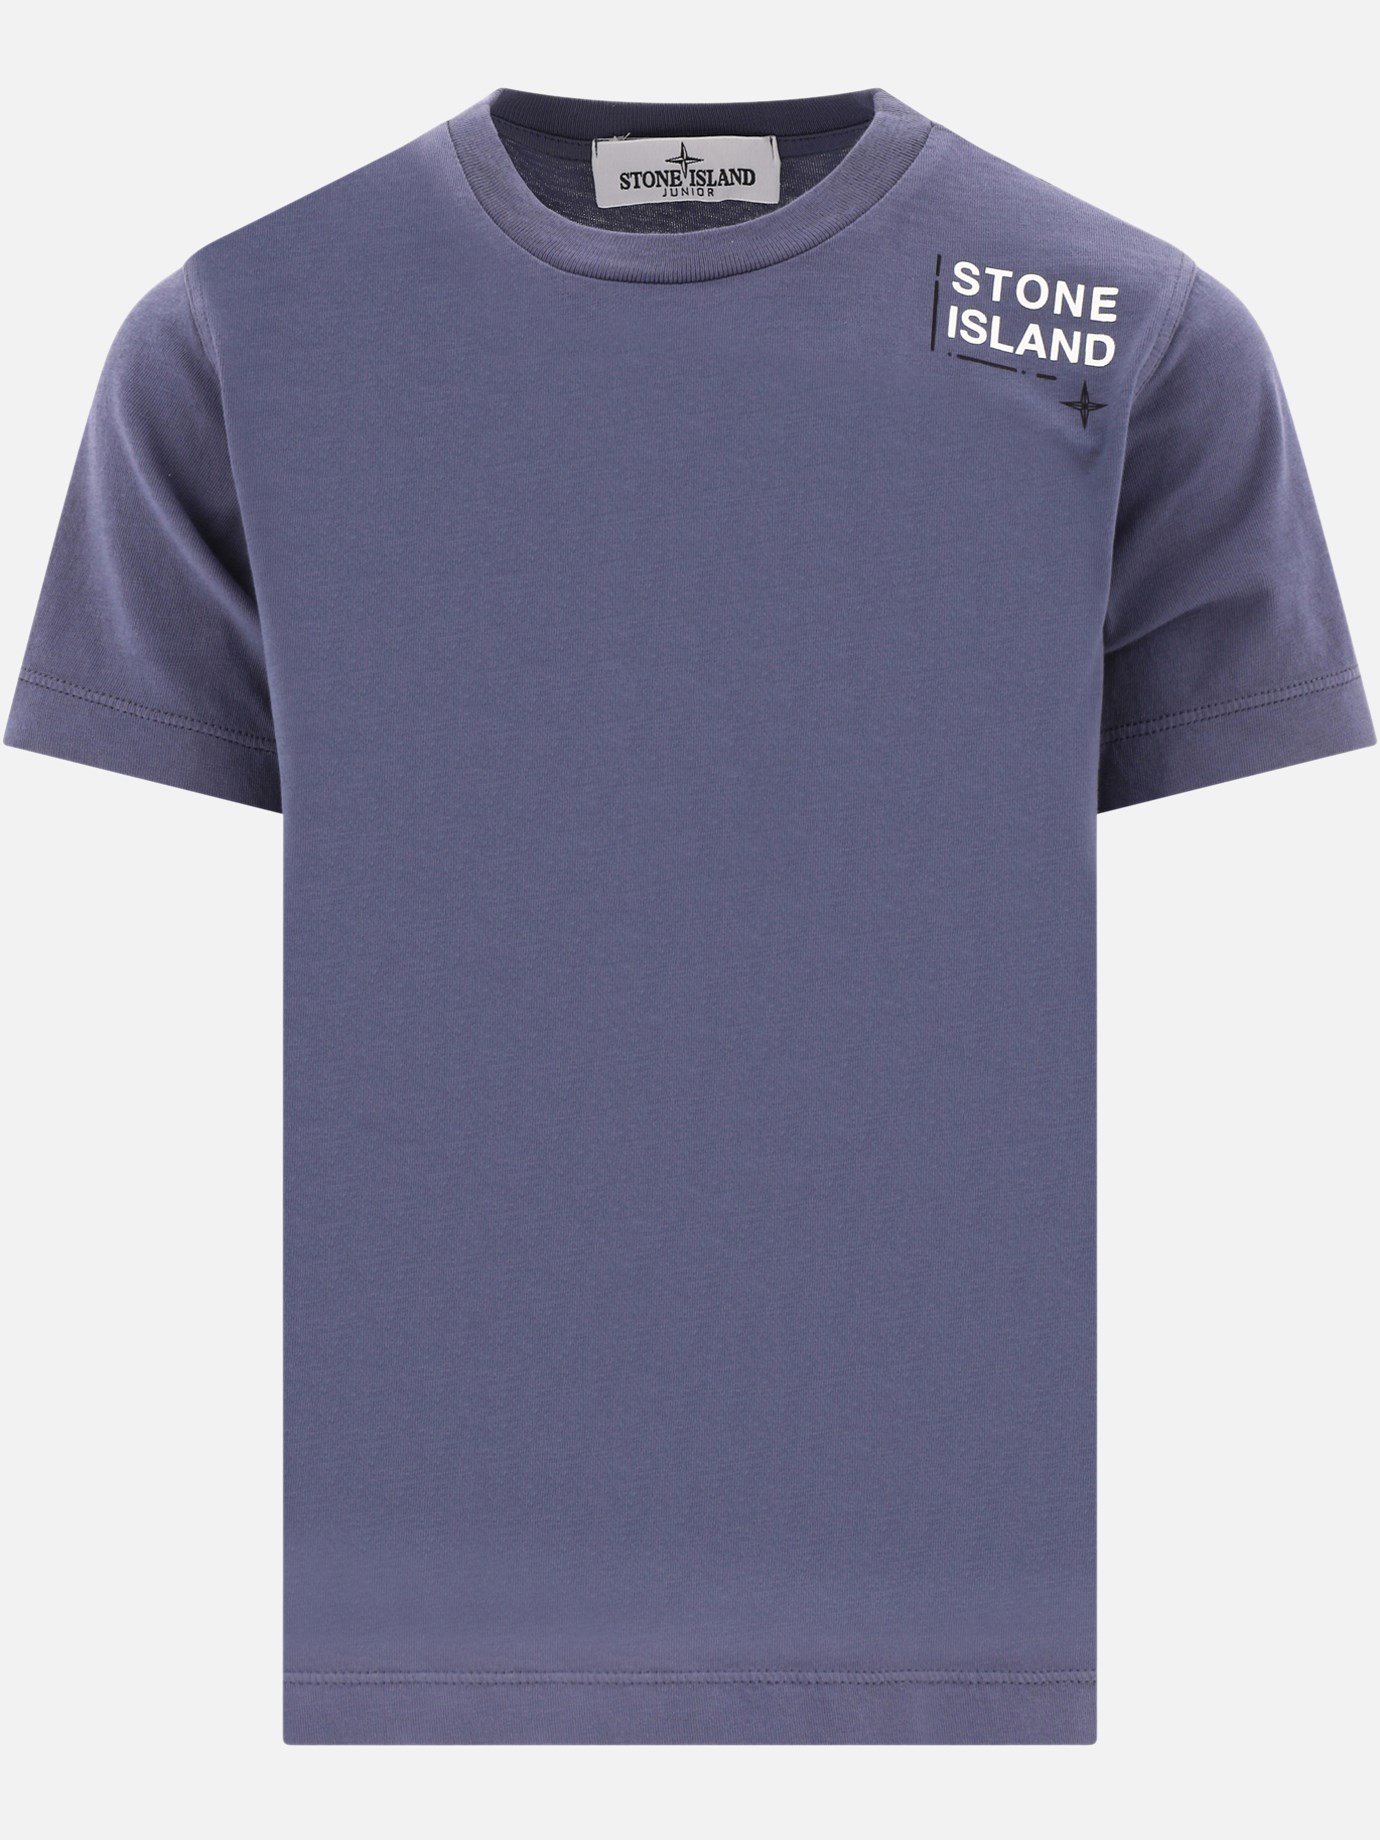  Stone Island  t-shirtby Stone Island Junior - 5